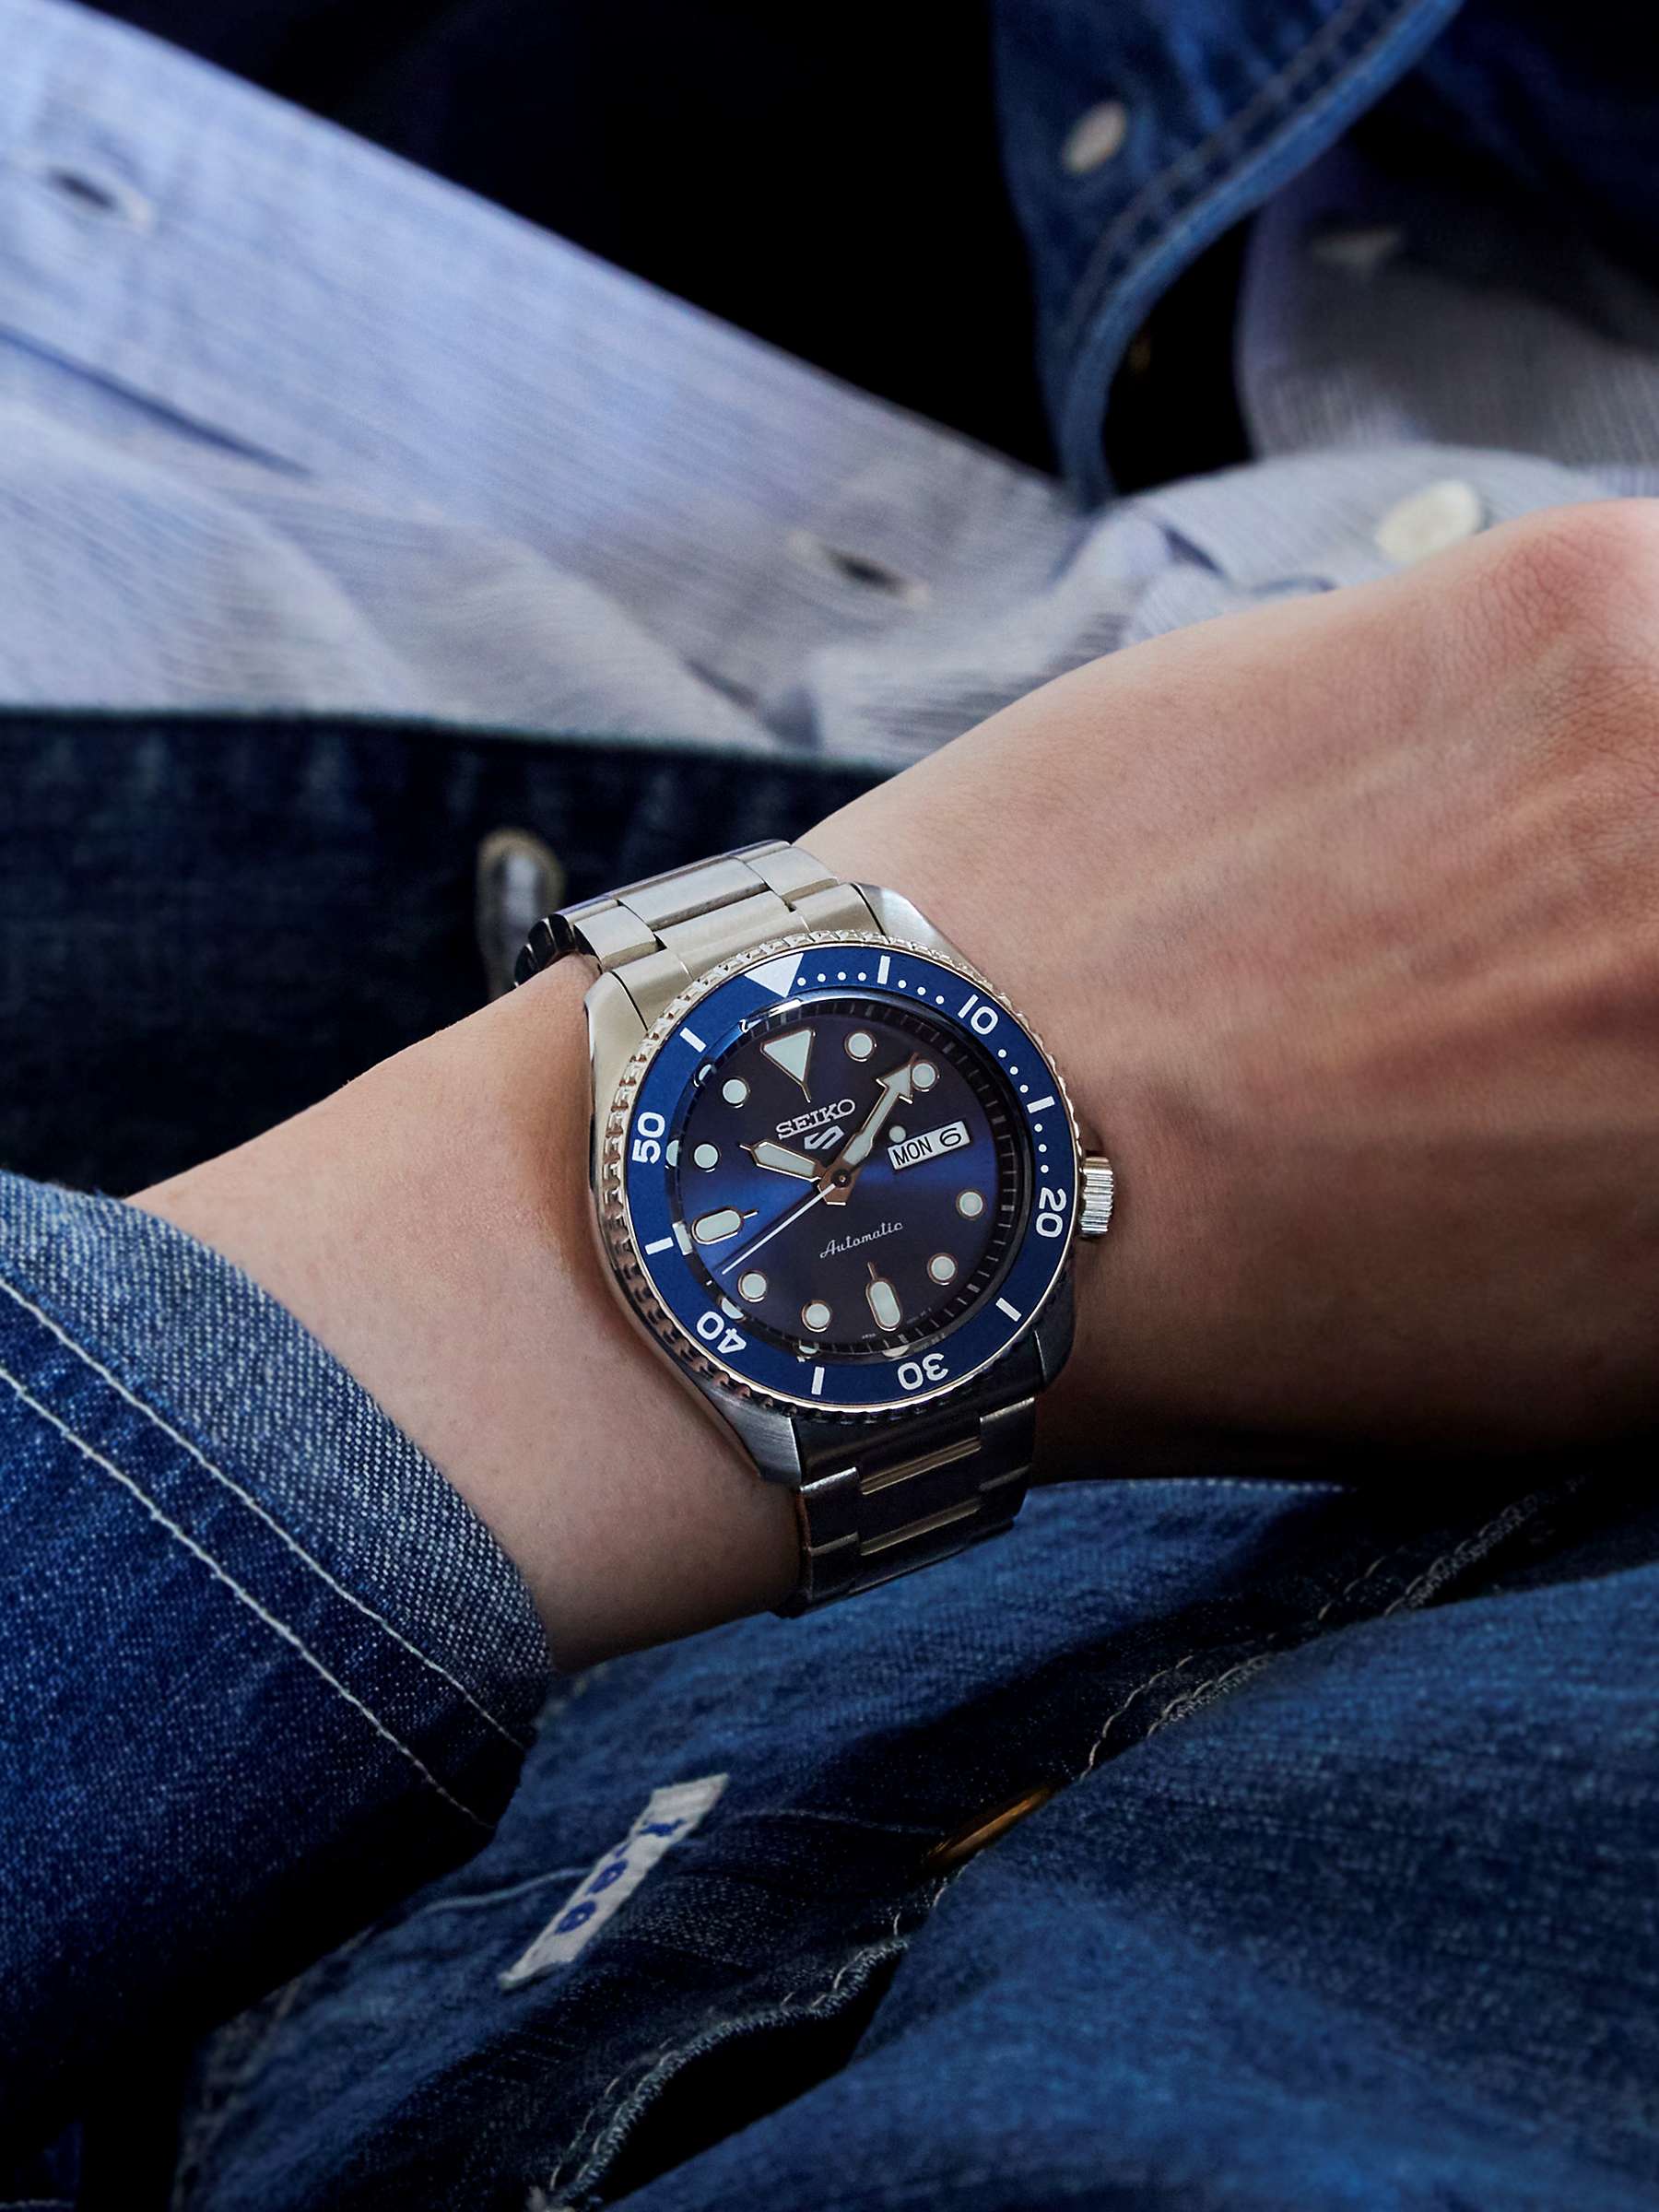 Buy Seiko SRPD51K1 Men's 5 Sports Automatic Day Date Bracelet Strap Watch, Silver/Blue Online at johnlewis.com